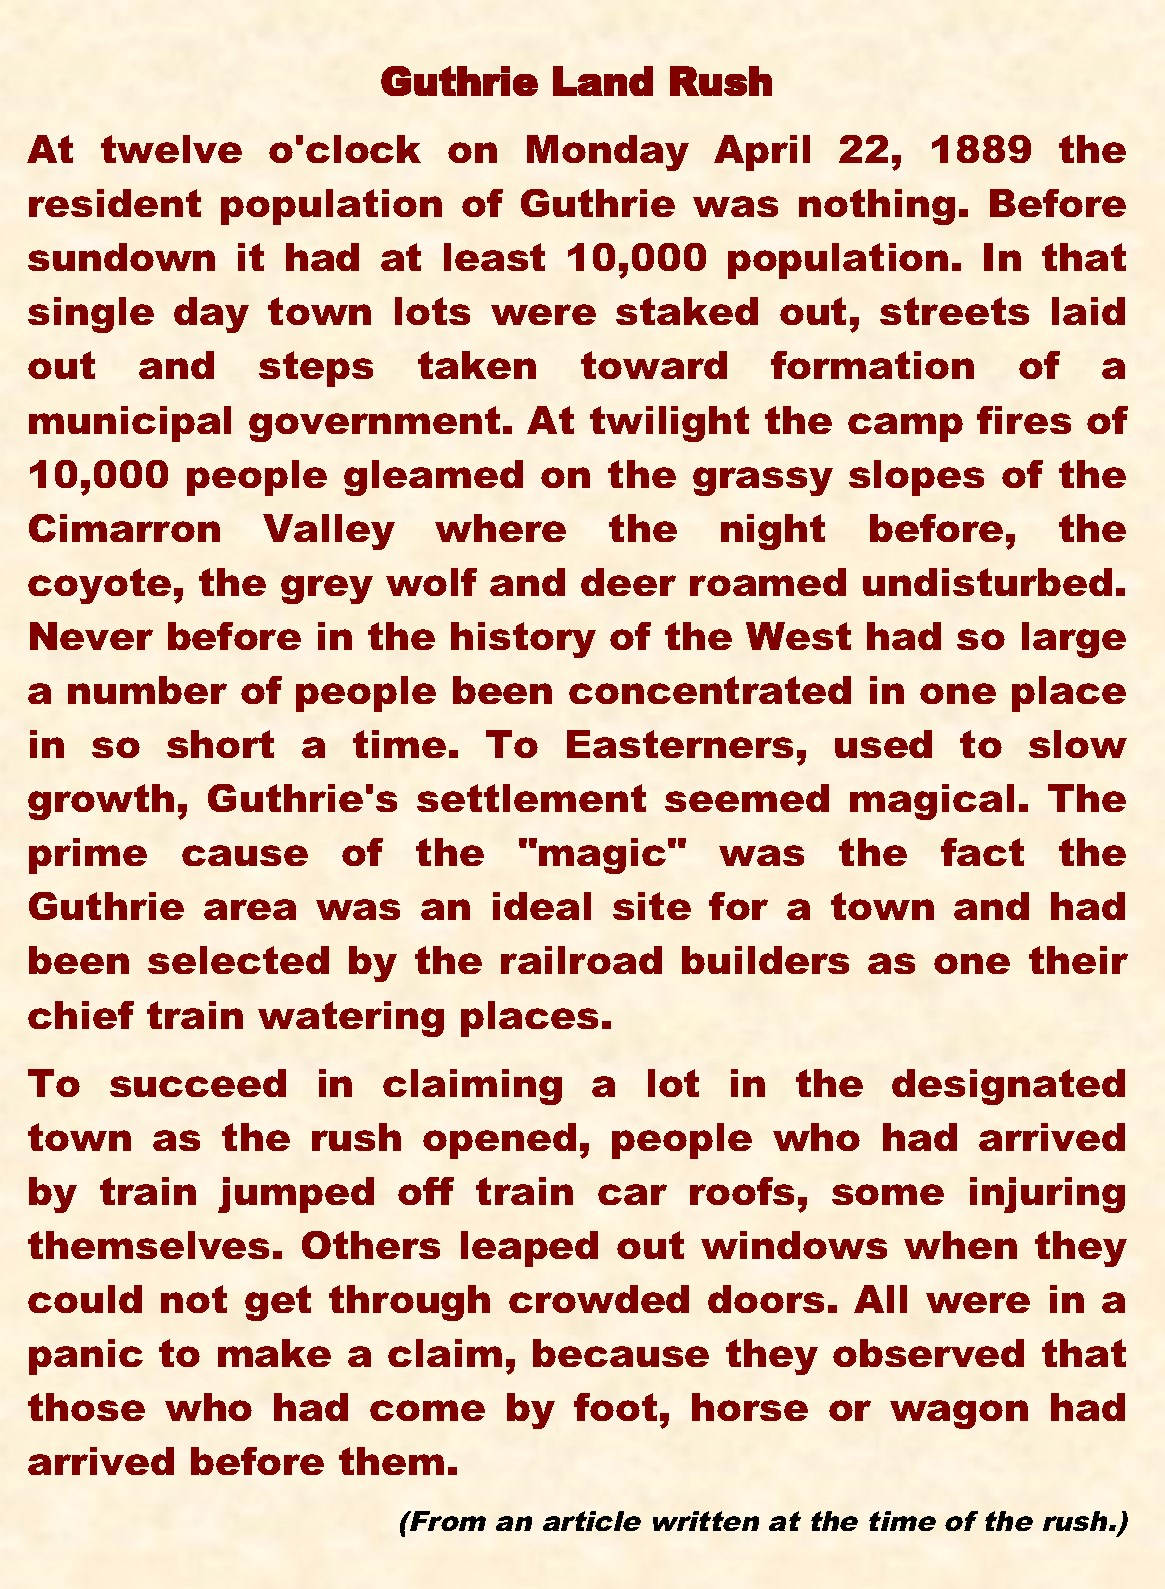 History-Guthrie Land Rush